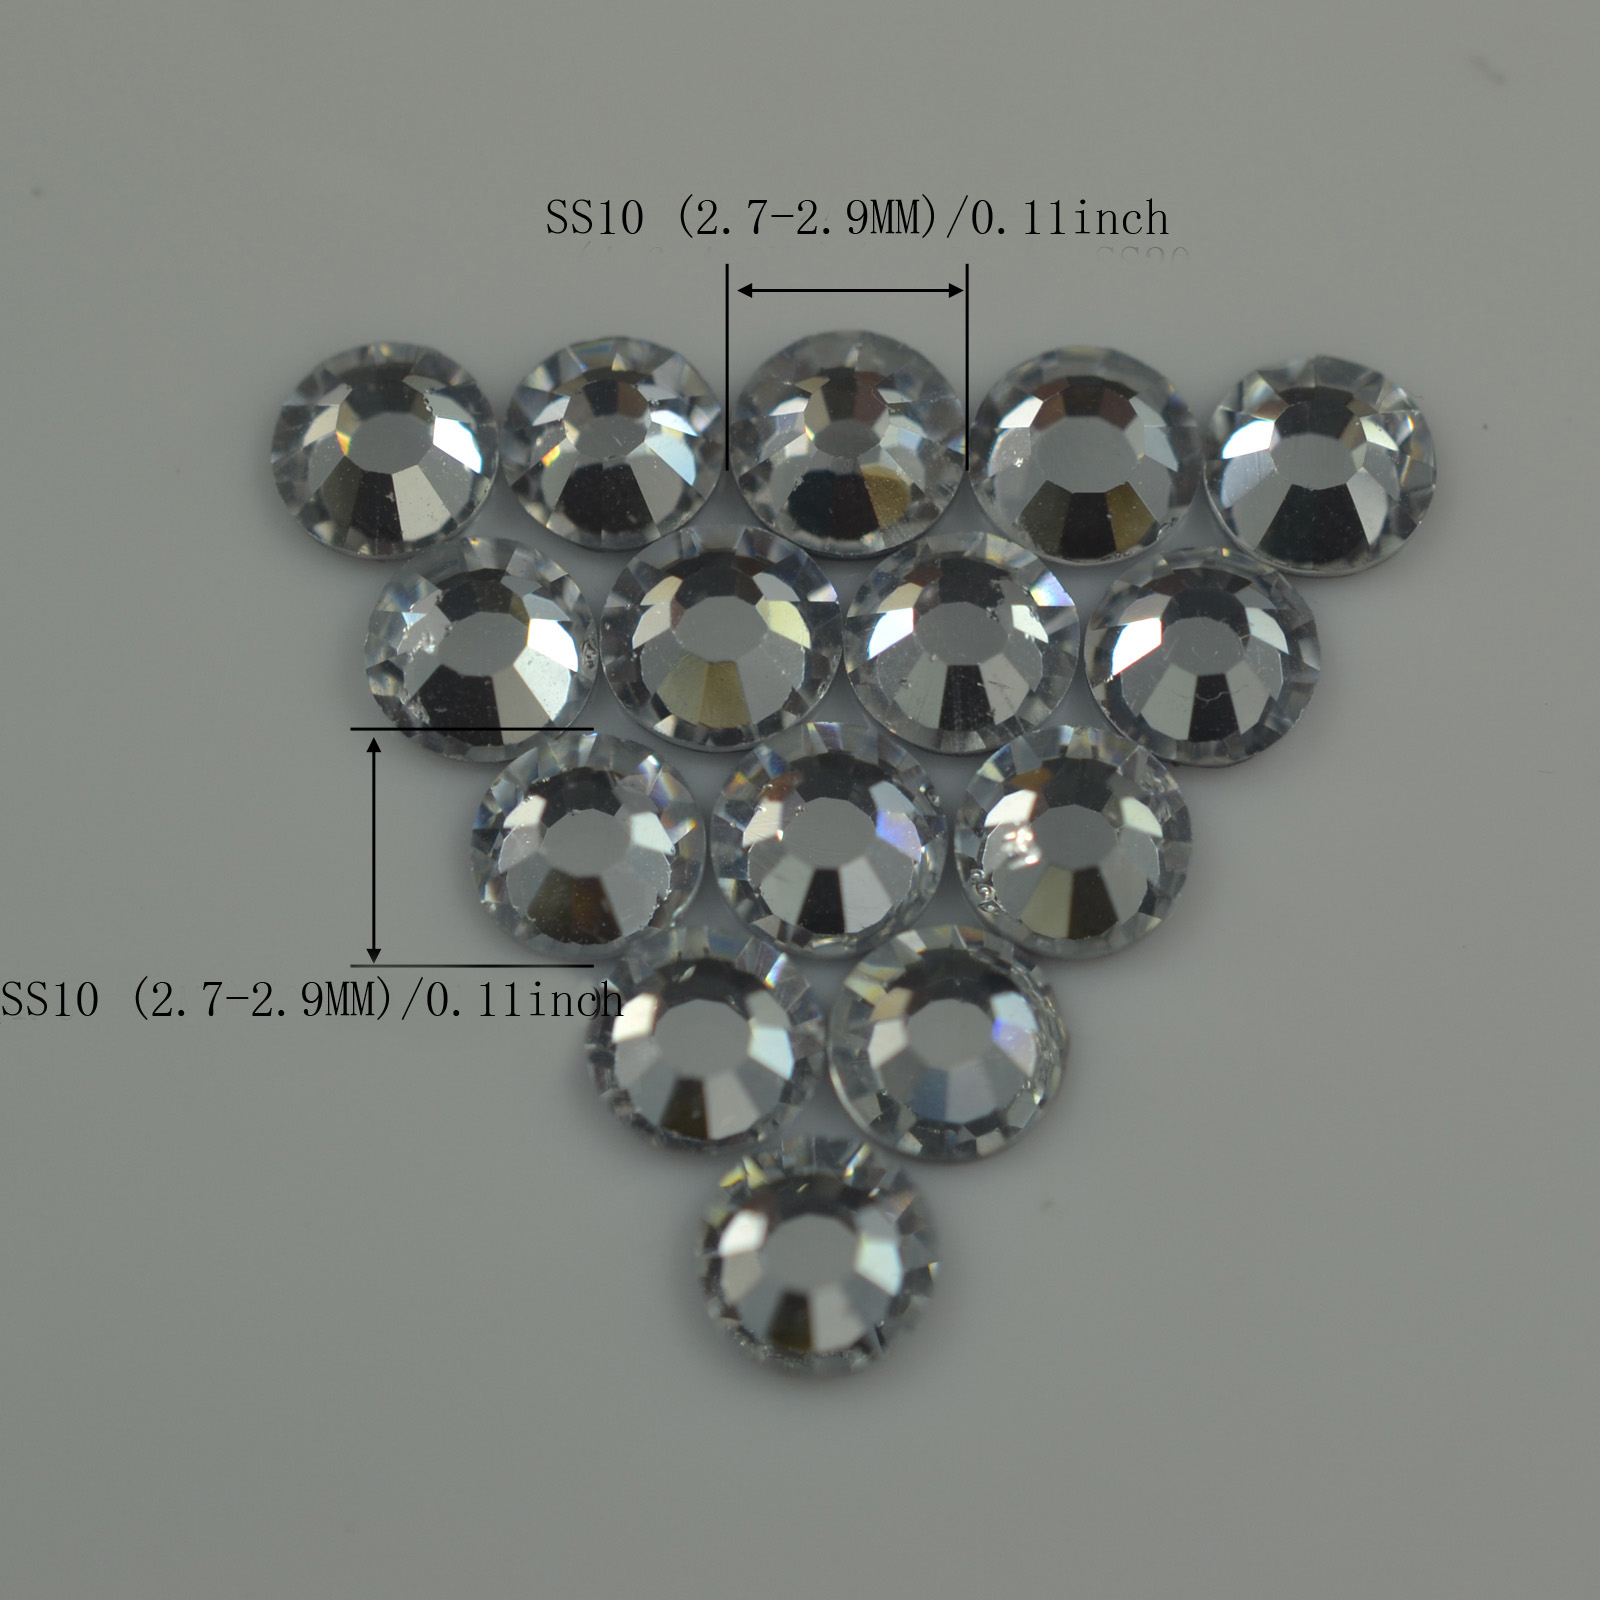 Crystal Clear 3mm Iron-On Rhinestones